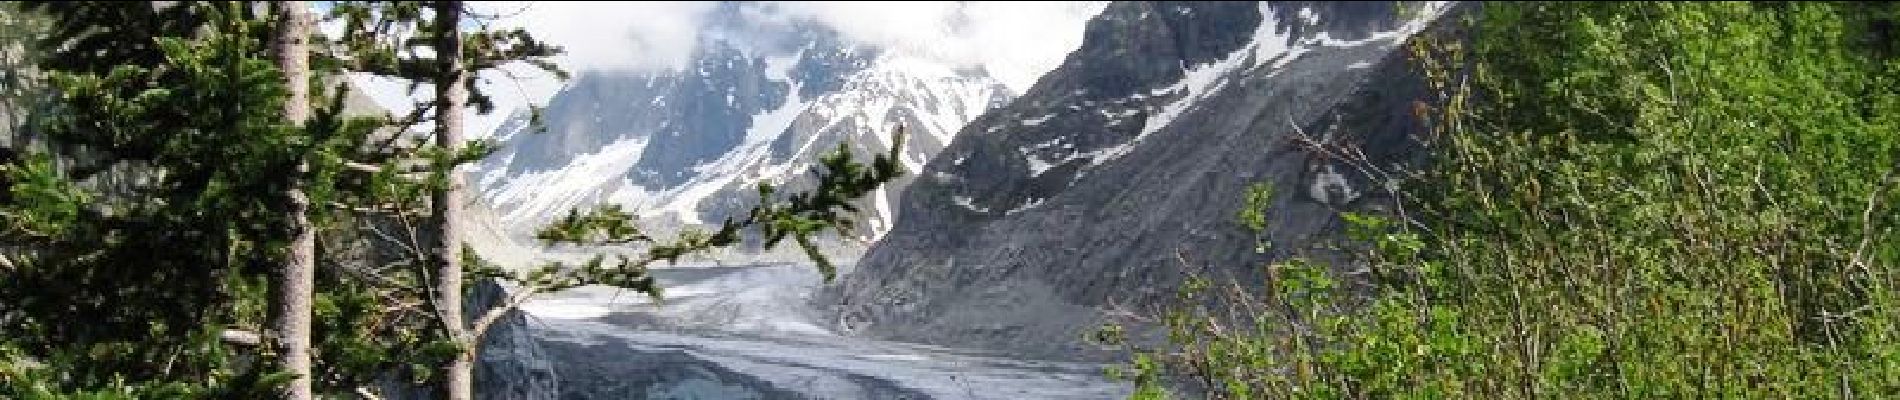 Tocht Stappen Chamonix-Mont-Blanc - Circuit de la Mer de Glace - Chamonix Mont Blanc - Photo